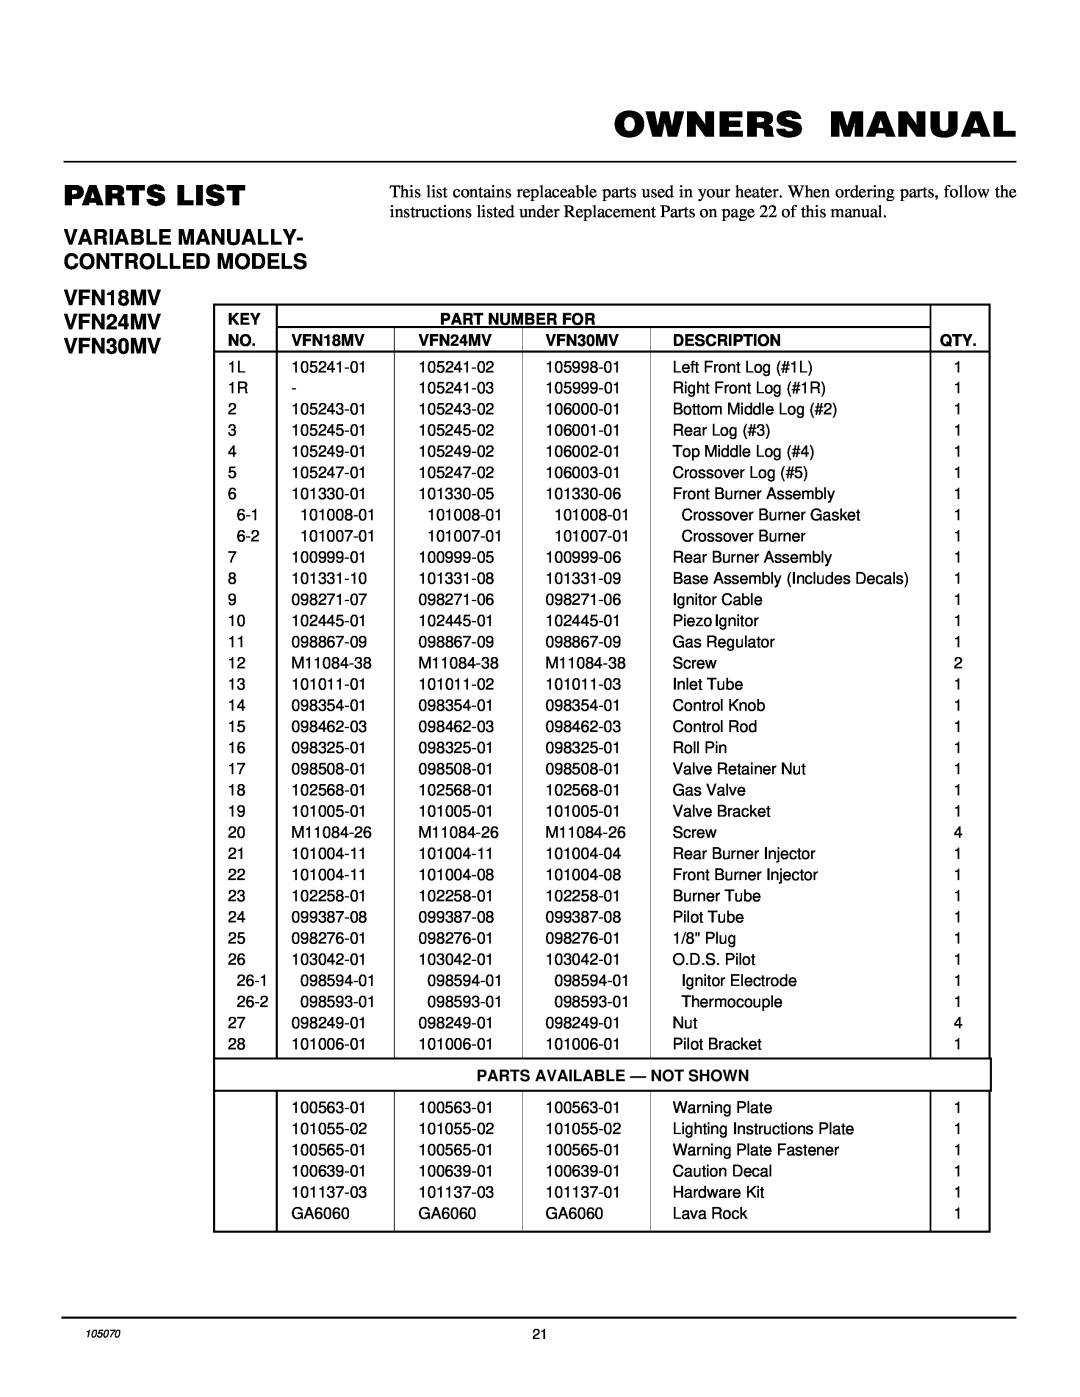 Desa Parts List, Variable Manually- Controlled Models, VFN18MV VFN24MV VFN30MV, Part Number For, Description 